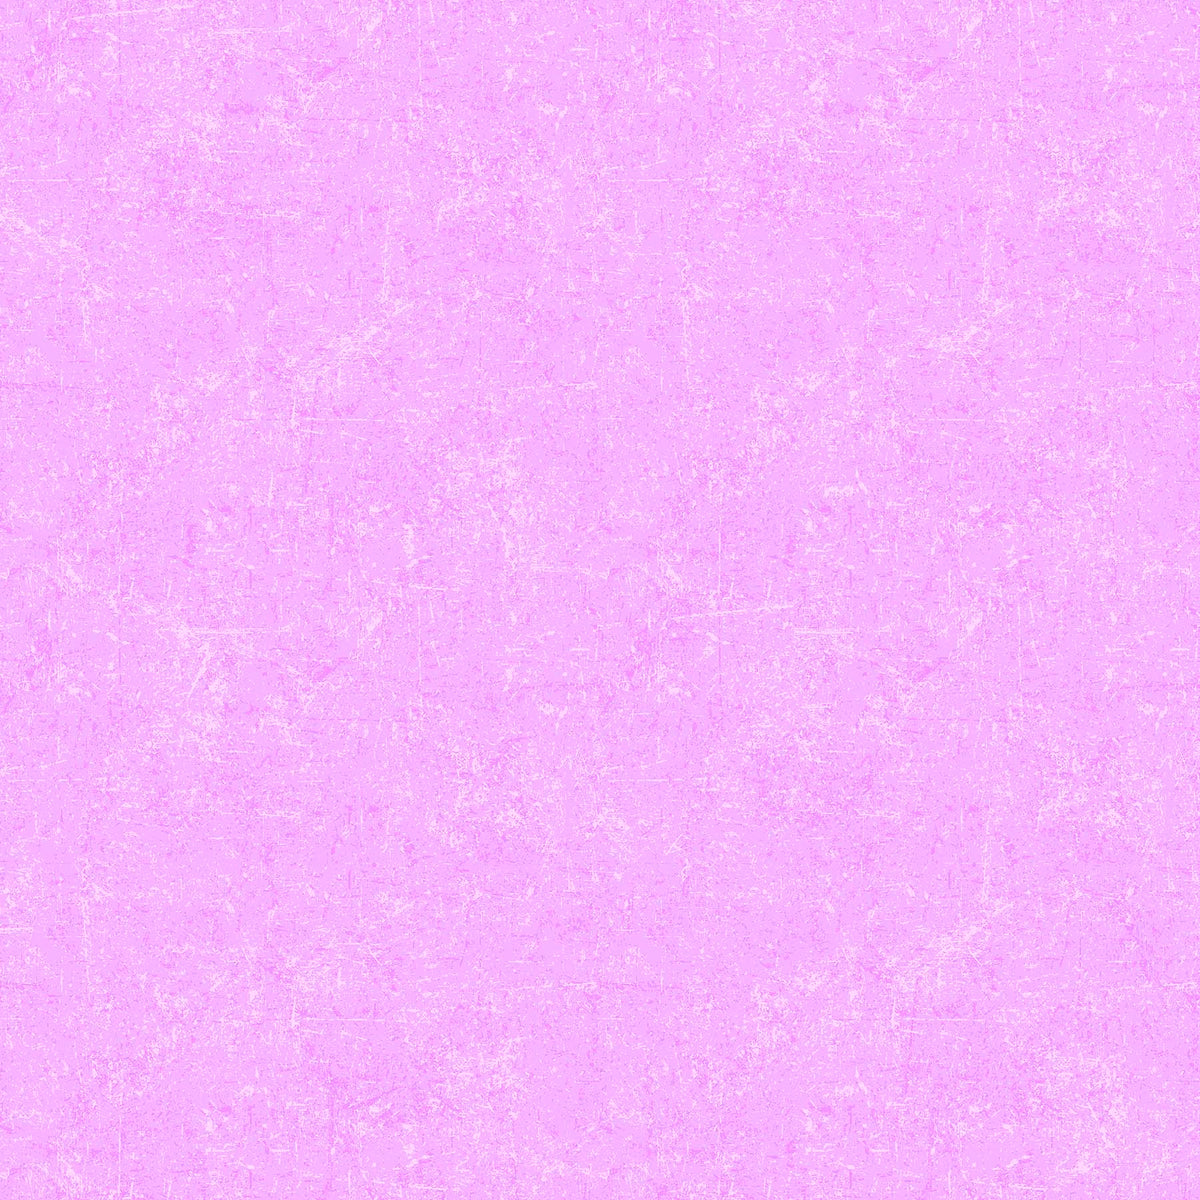 Glisten Sorbet Quilt Fabric - Blender in Raspberry Pink - P10091-28